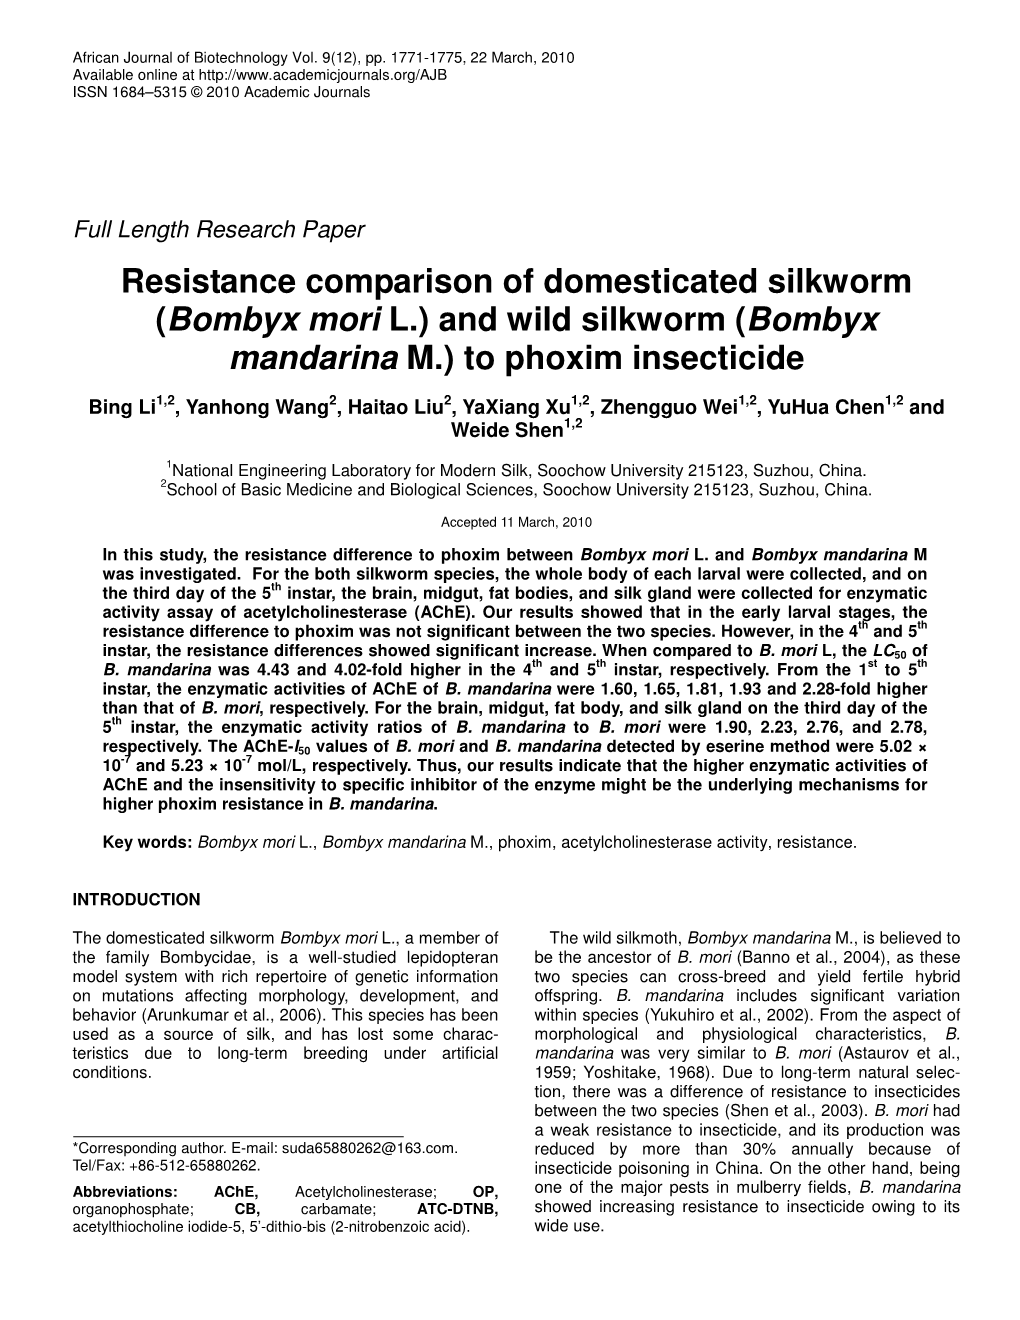 Bombyx Mori L.) and Wild Silkworm (Bombyx Mandarina M.) to Phoxim Insecticide